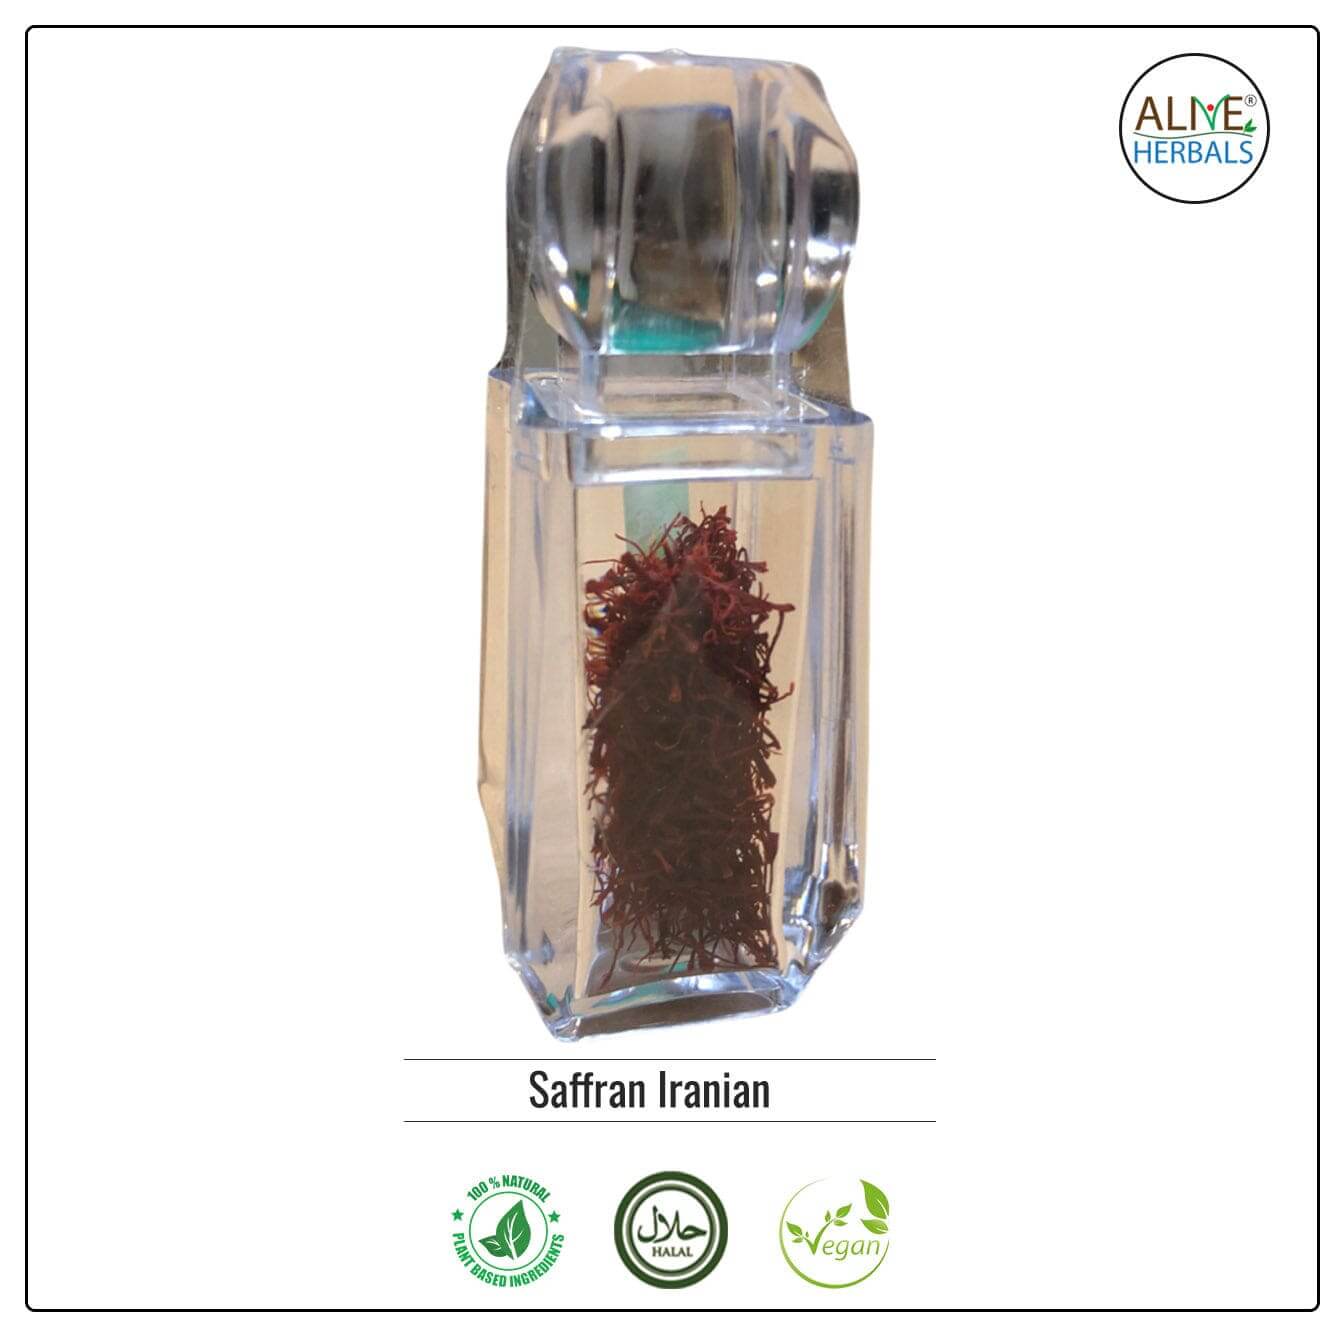 Saffron Iranian - Buy at Natural Food Store | Alive Herbals.